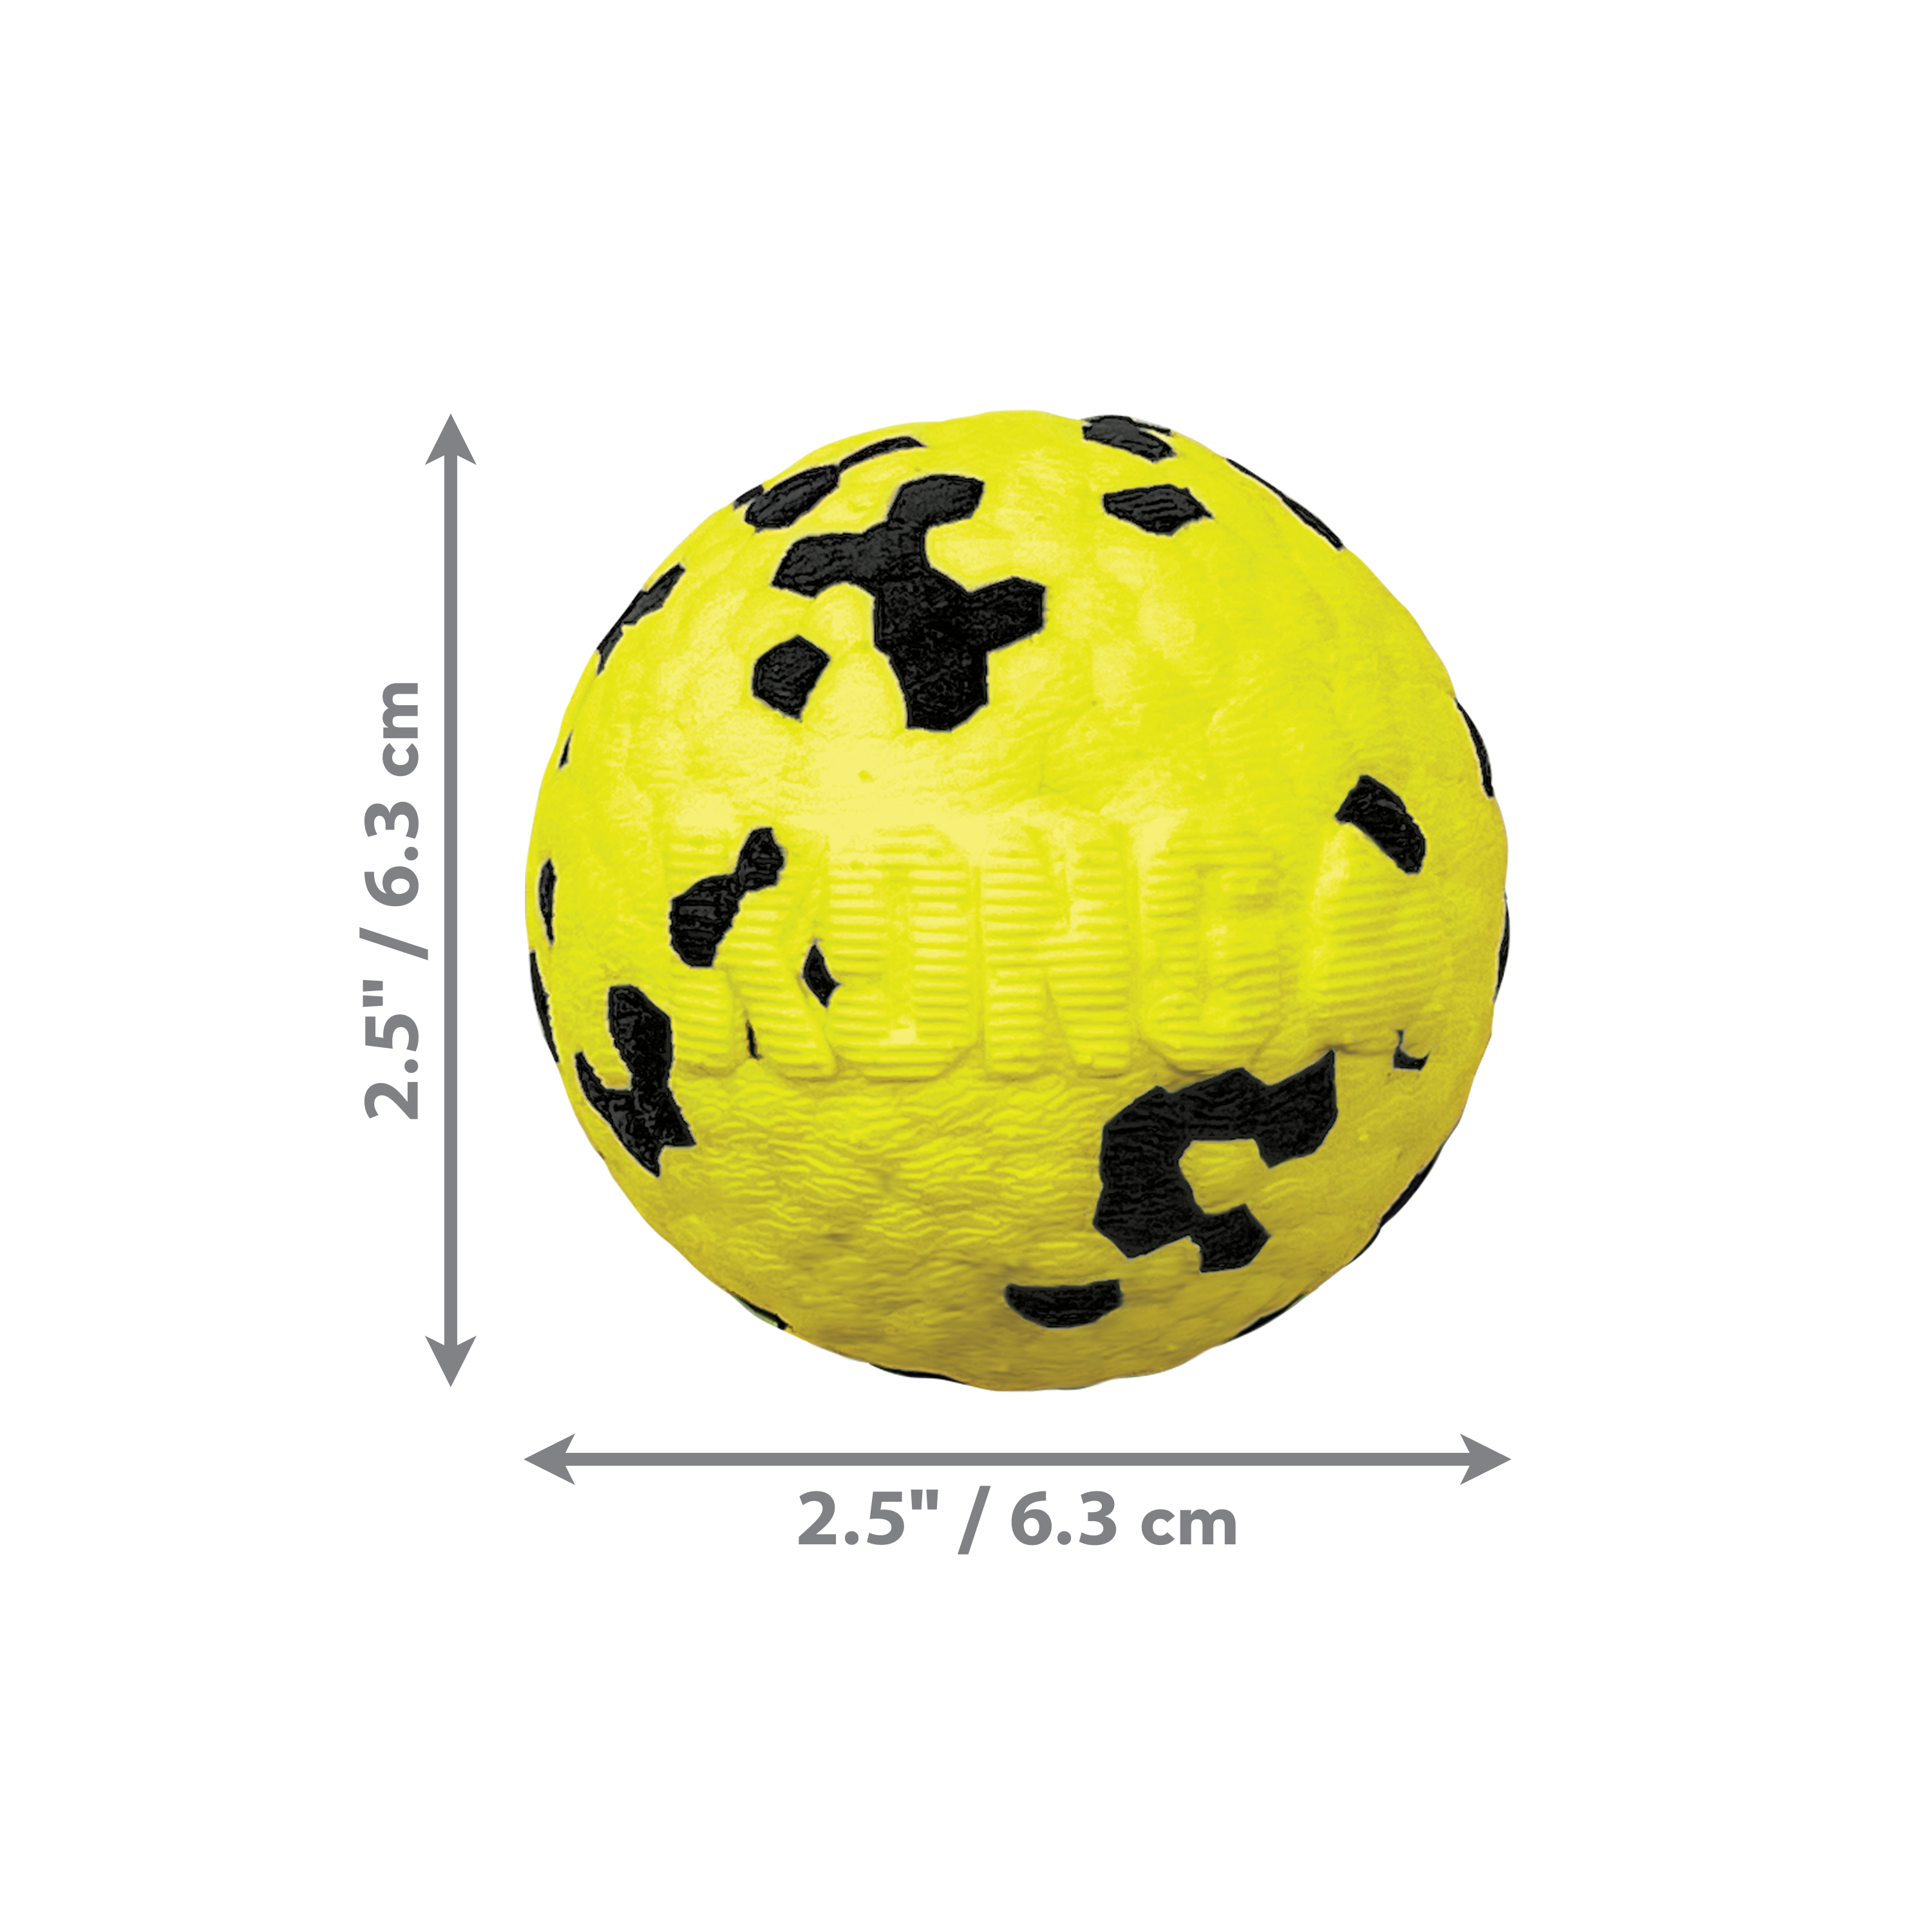 Reflex Ball dimoffpack Produktbild